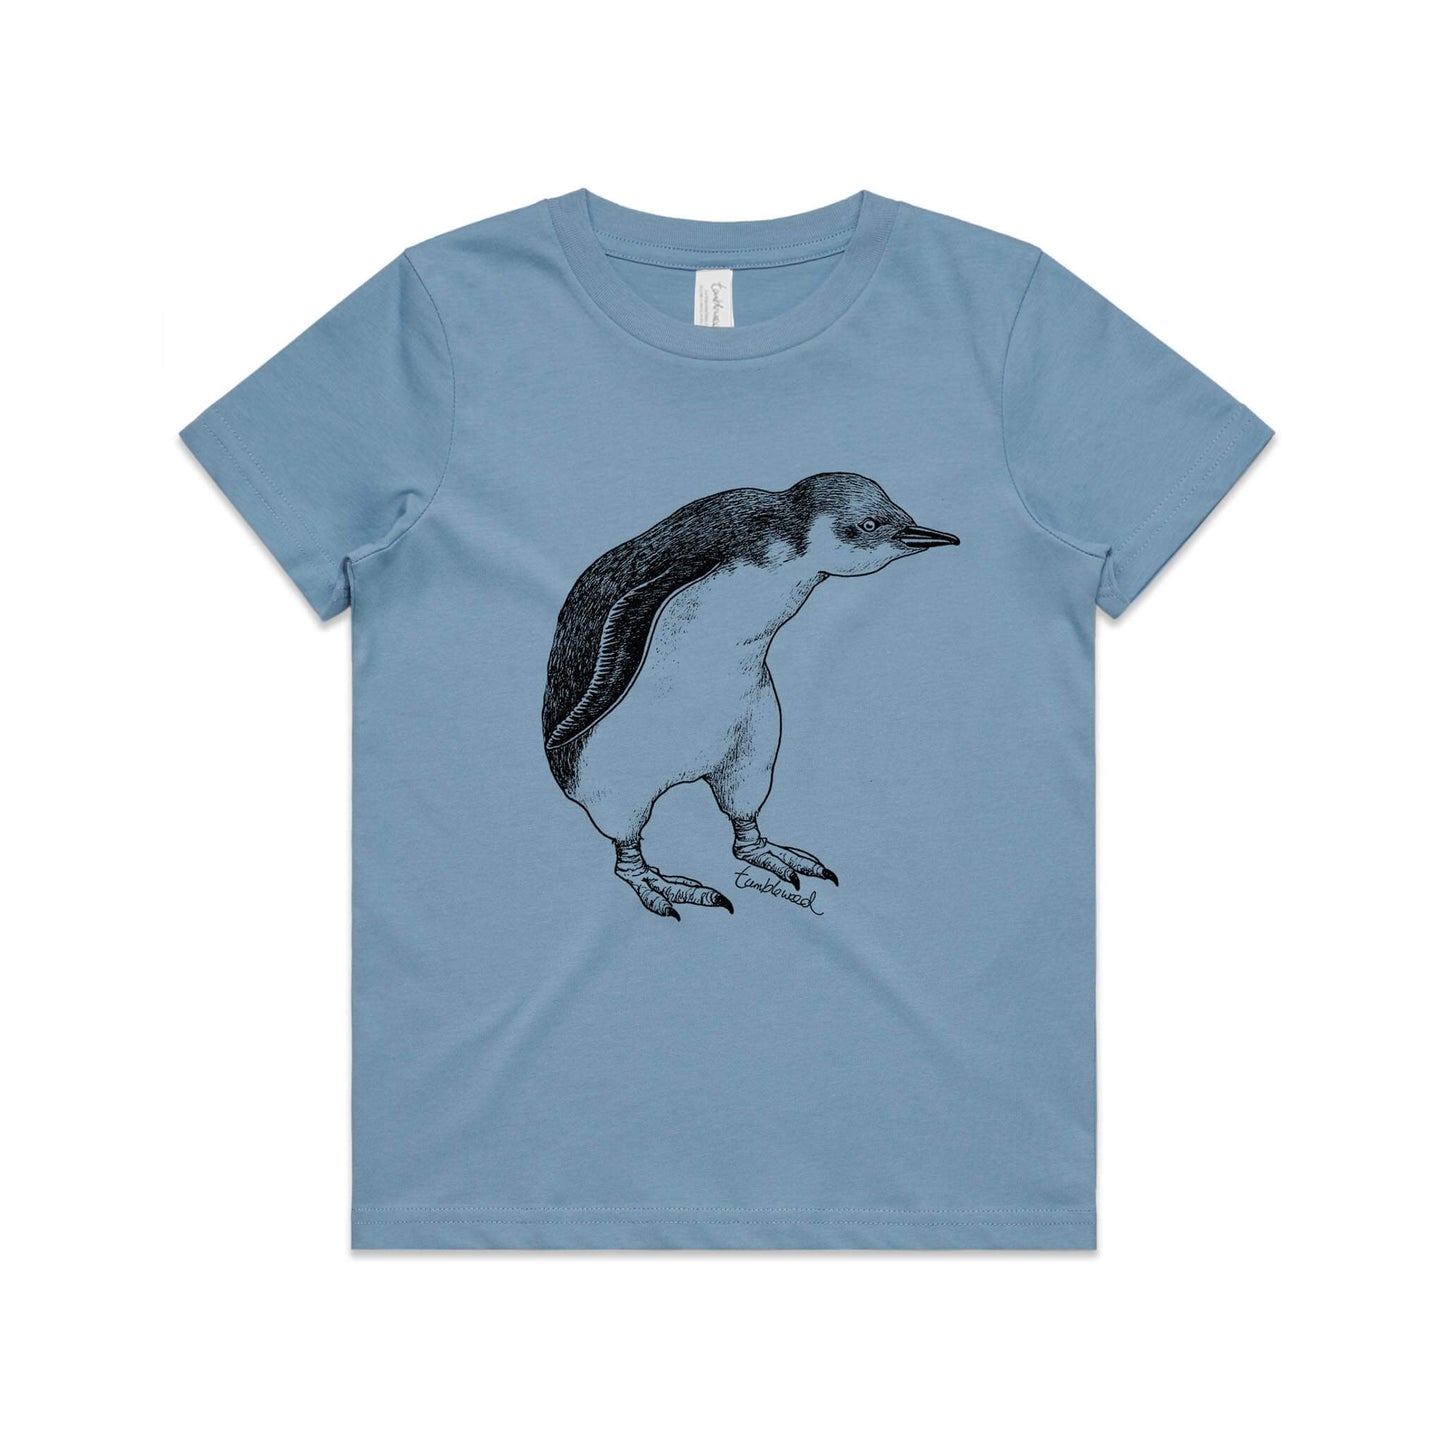 Kororā/Little Penguin Kids’ T-shirt